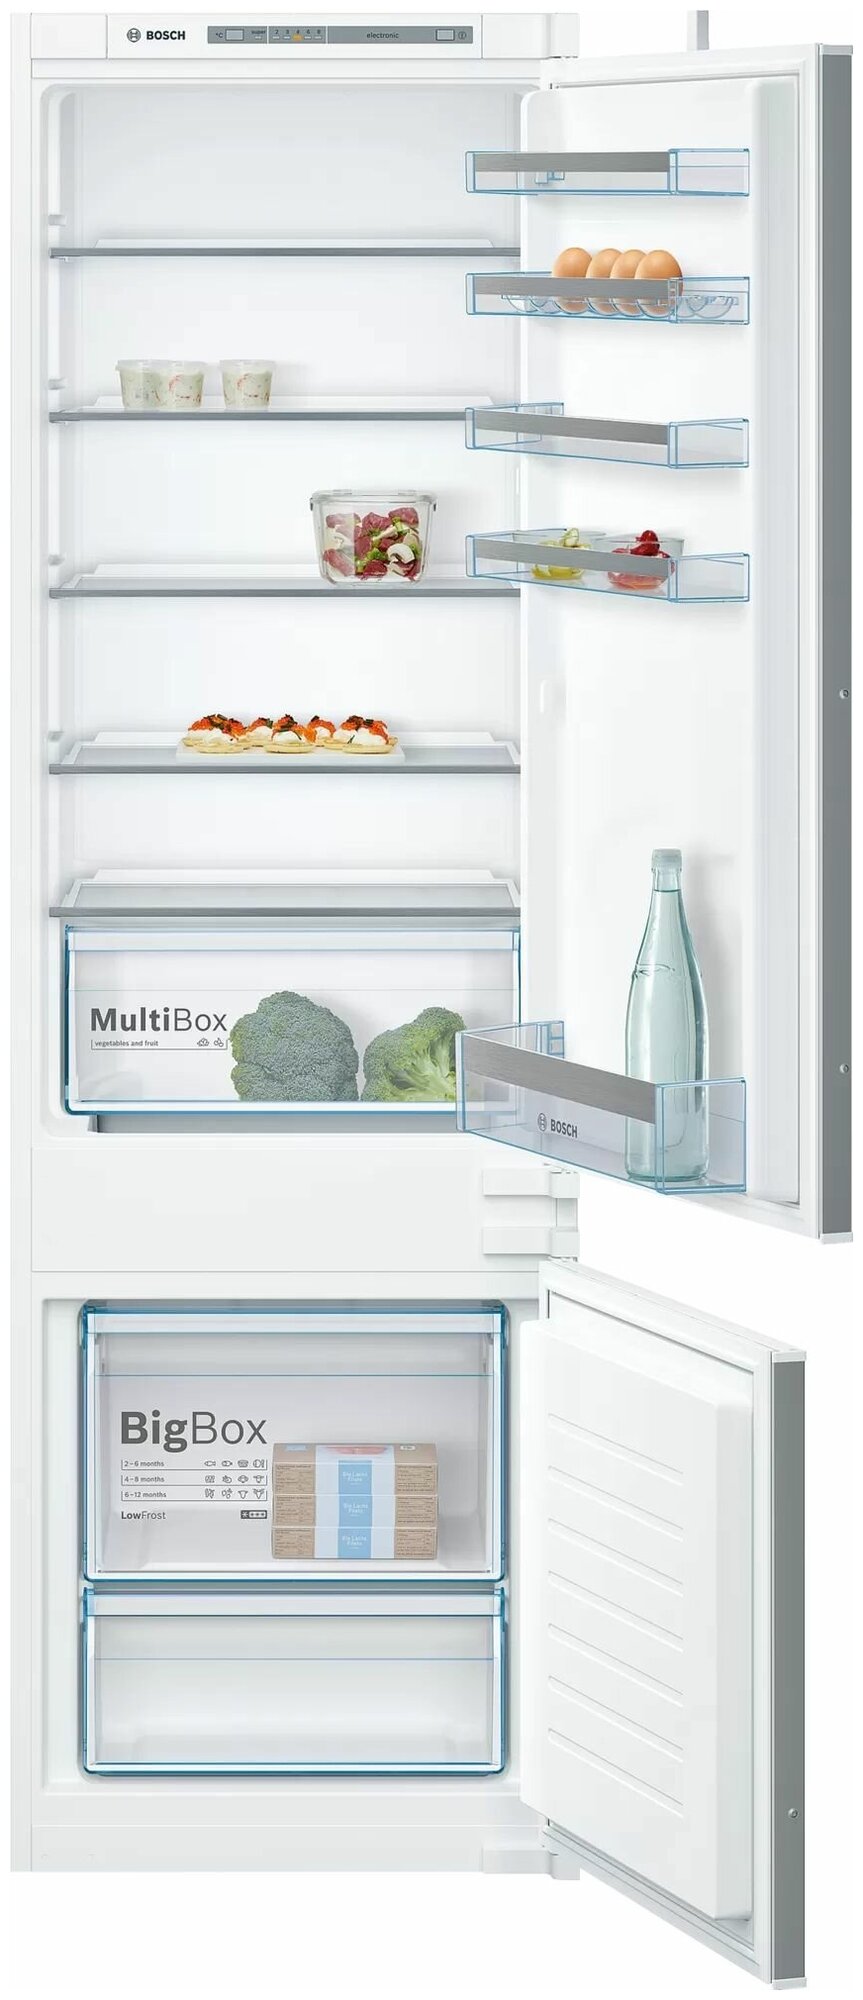 Встраиваемый холодильник с морозильной камерой снизу Bosch KIV87VS30M Series 4, 1775 x 560 x 550, 210/64 л, 36 дБ, LowFrost, VarioZone